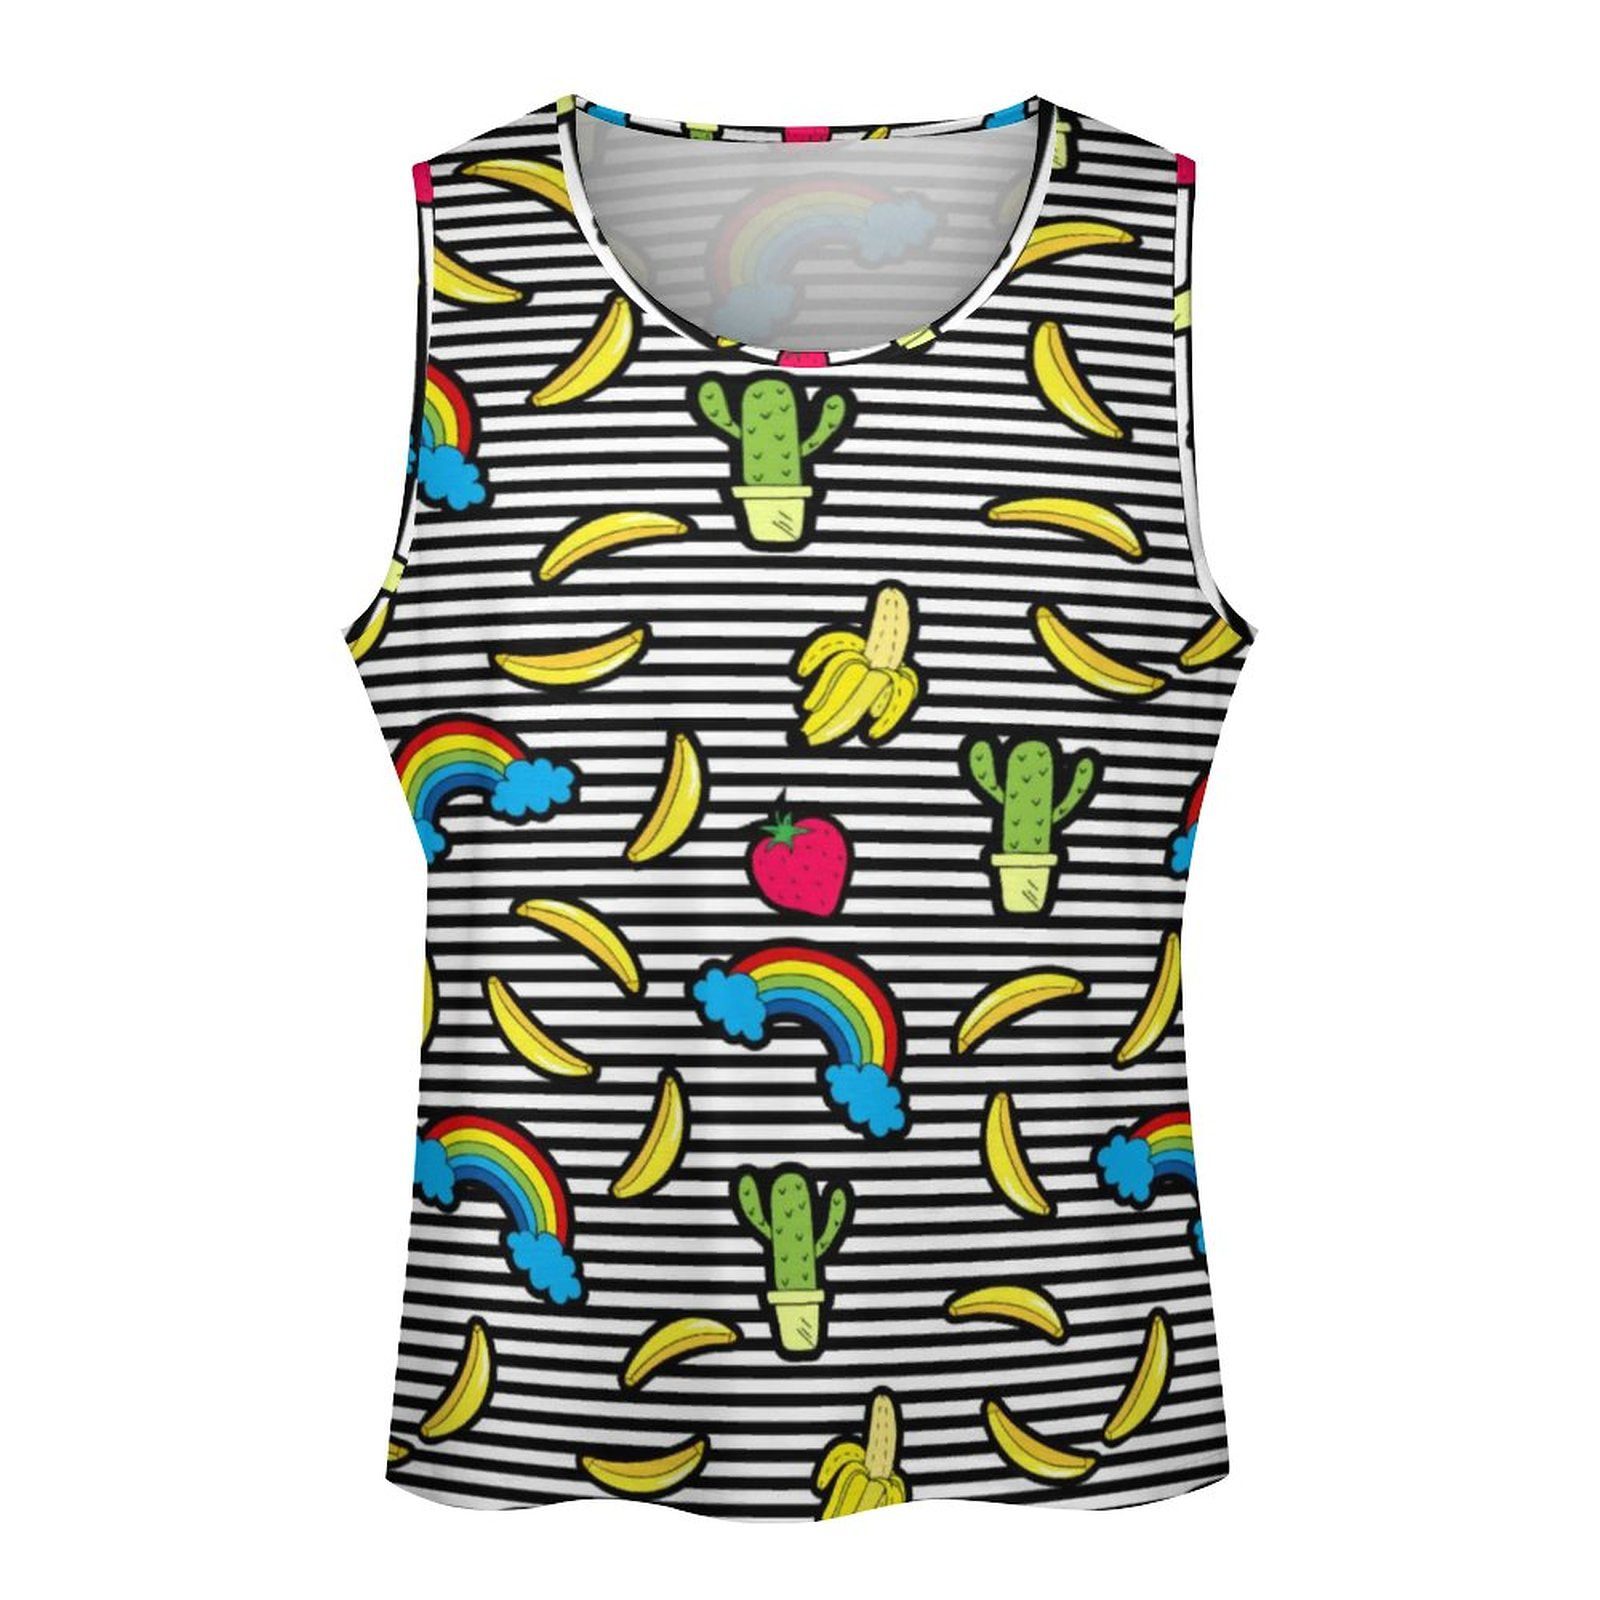 Cactus Rainbow Fruit Tank Top Men Black White Stripes Sportswear Tops Summer Gym Graphic Sleeveless Shirts Big Size 4XL 5XL